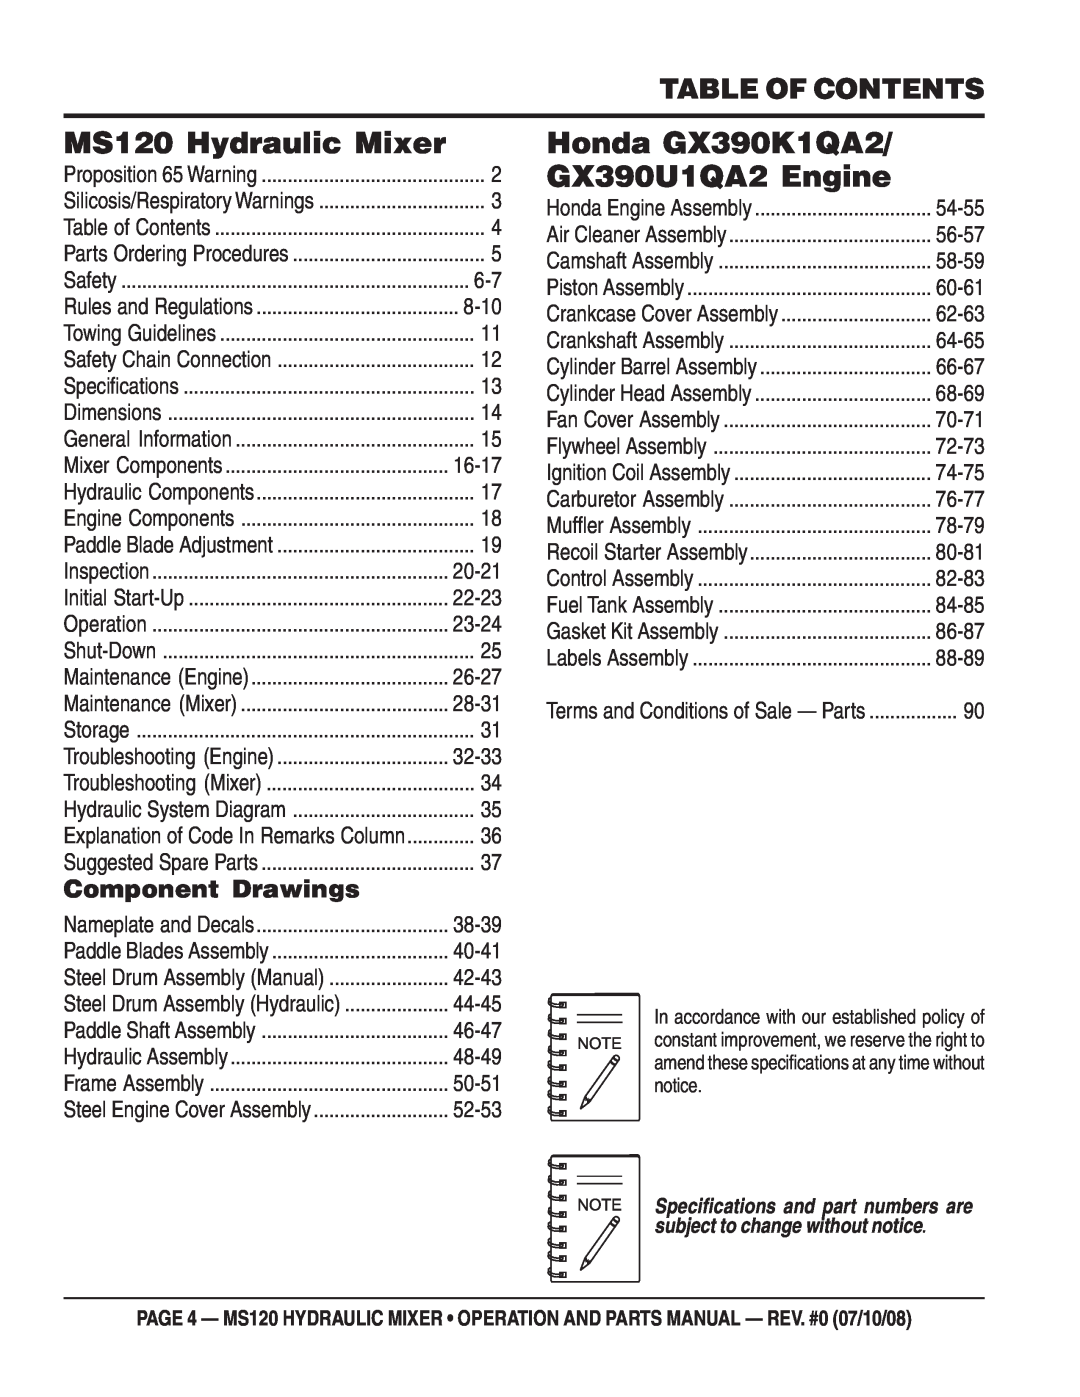 Stow MS120H13 Table Of Contents, Component Drawings, MS120 Hydraulic Mixer, Honda GX390K1QA2/ GX390U1QA2 Engine, 8-10 